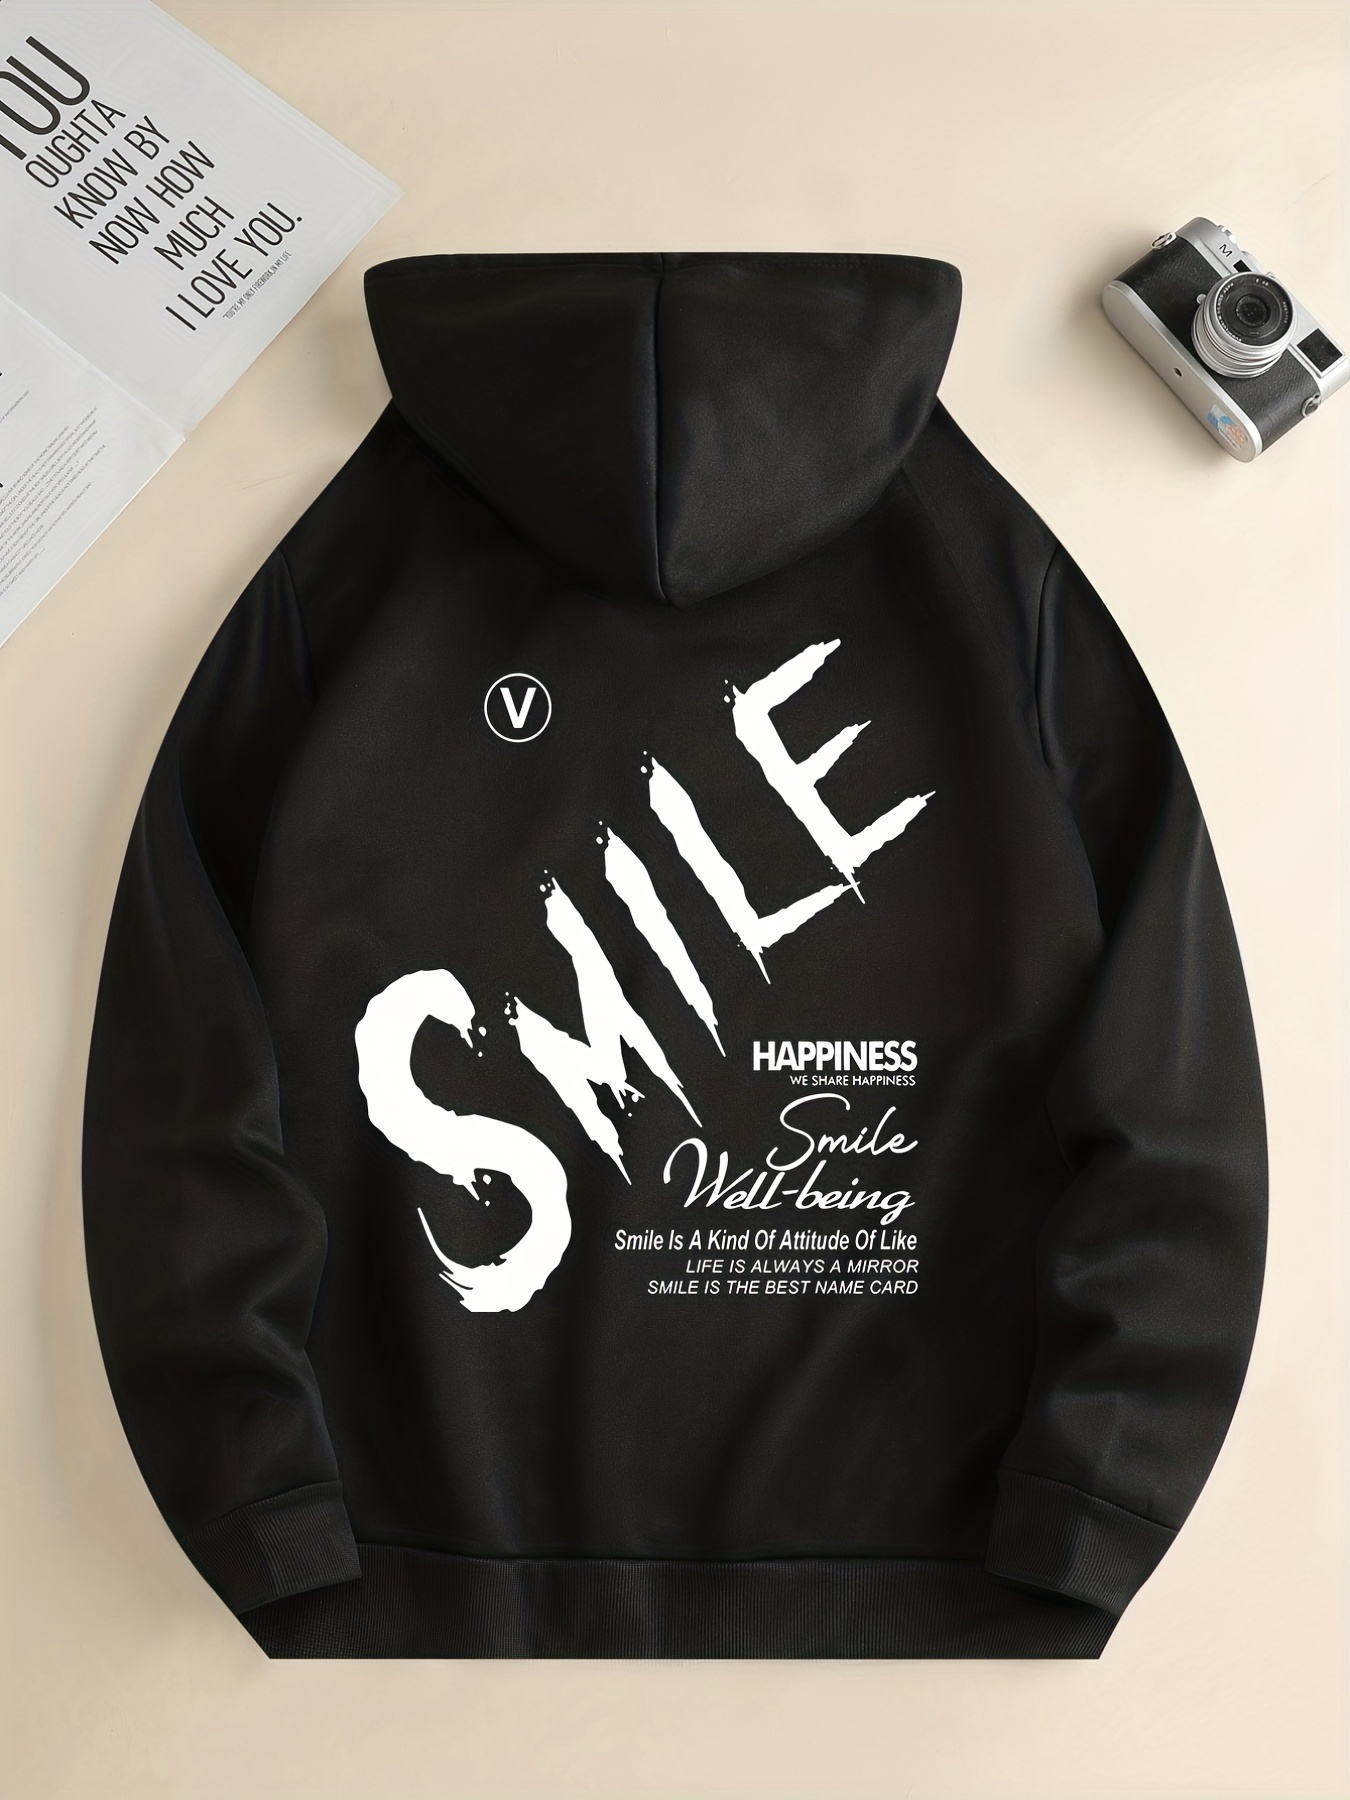 Readymade Smile logo-print hoodie - Grey